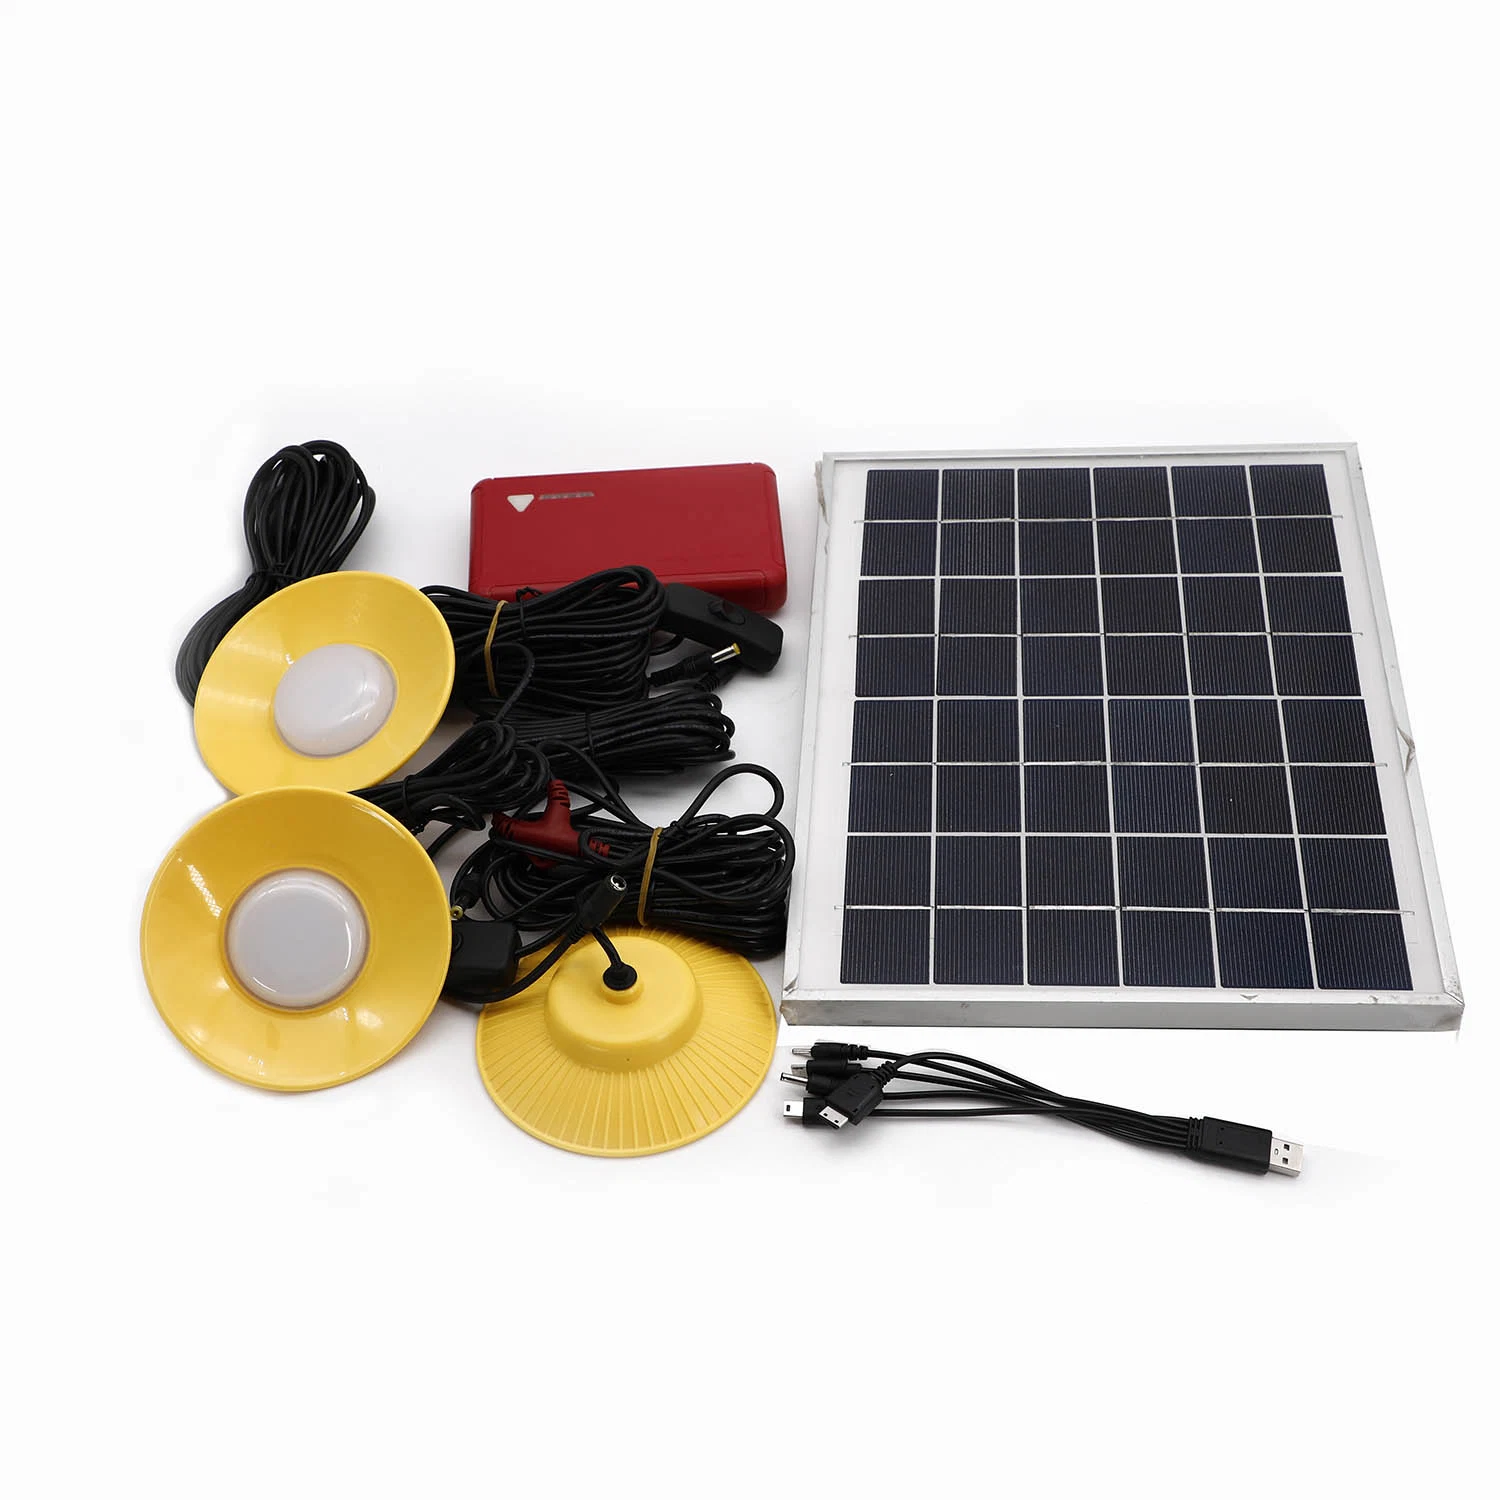 5200mAh Li-Ion Battery Backup 10W Notfälle Home Use Beleuchtung Solar LED-Beleuchtungssystem Kit Light SF-910 mit Panel-Stromversorgung